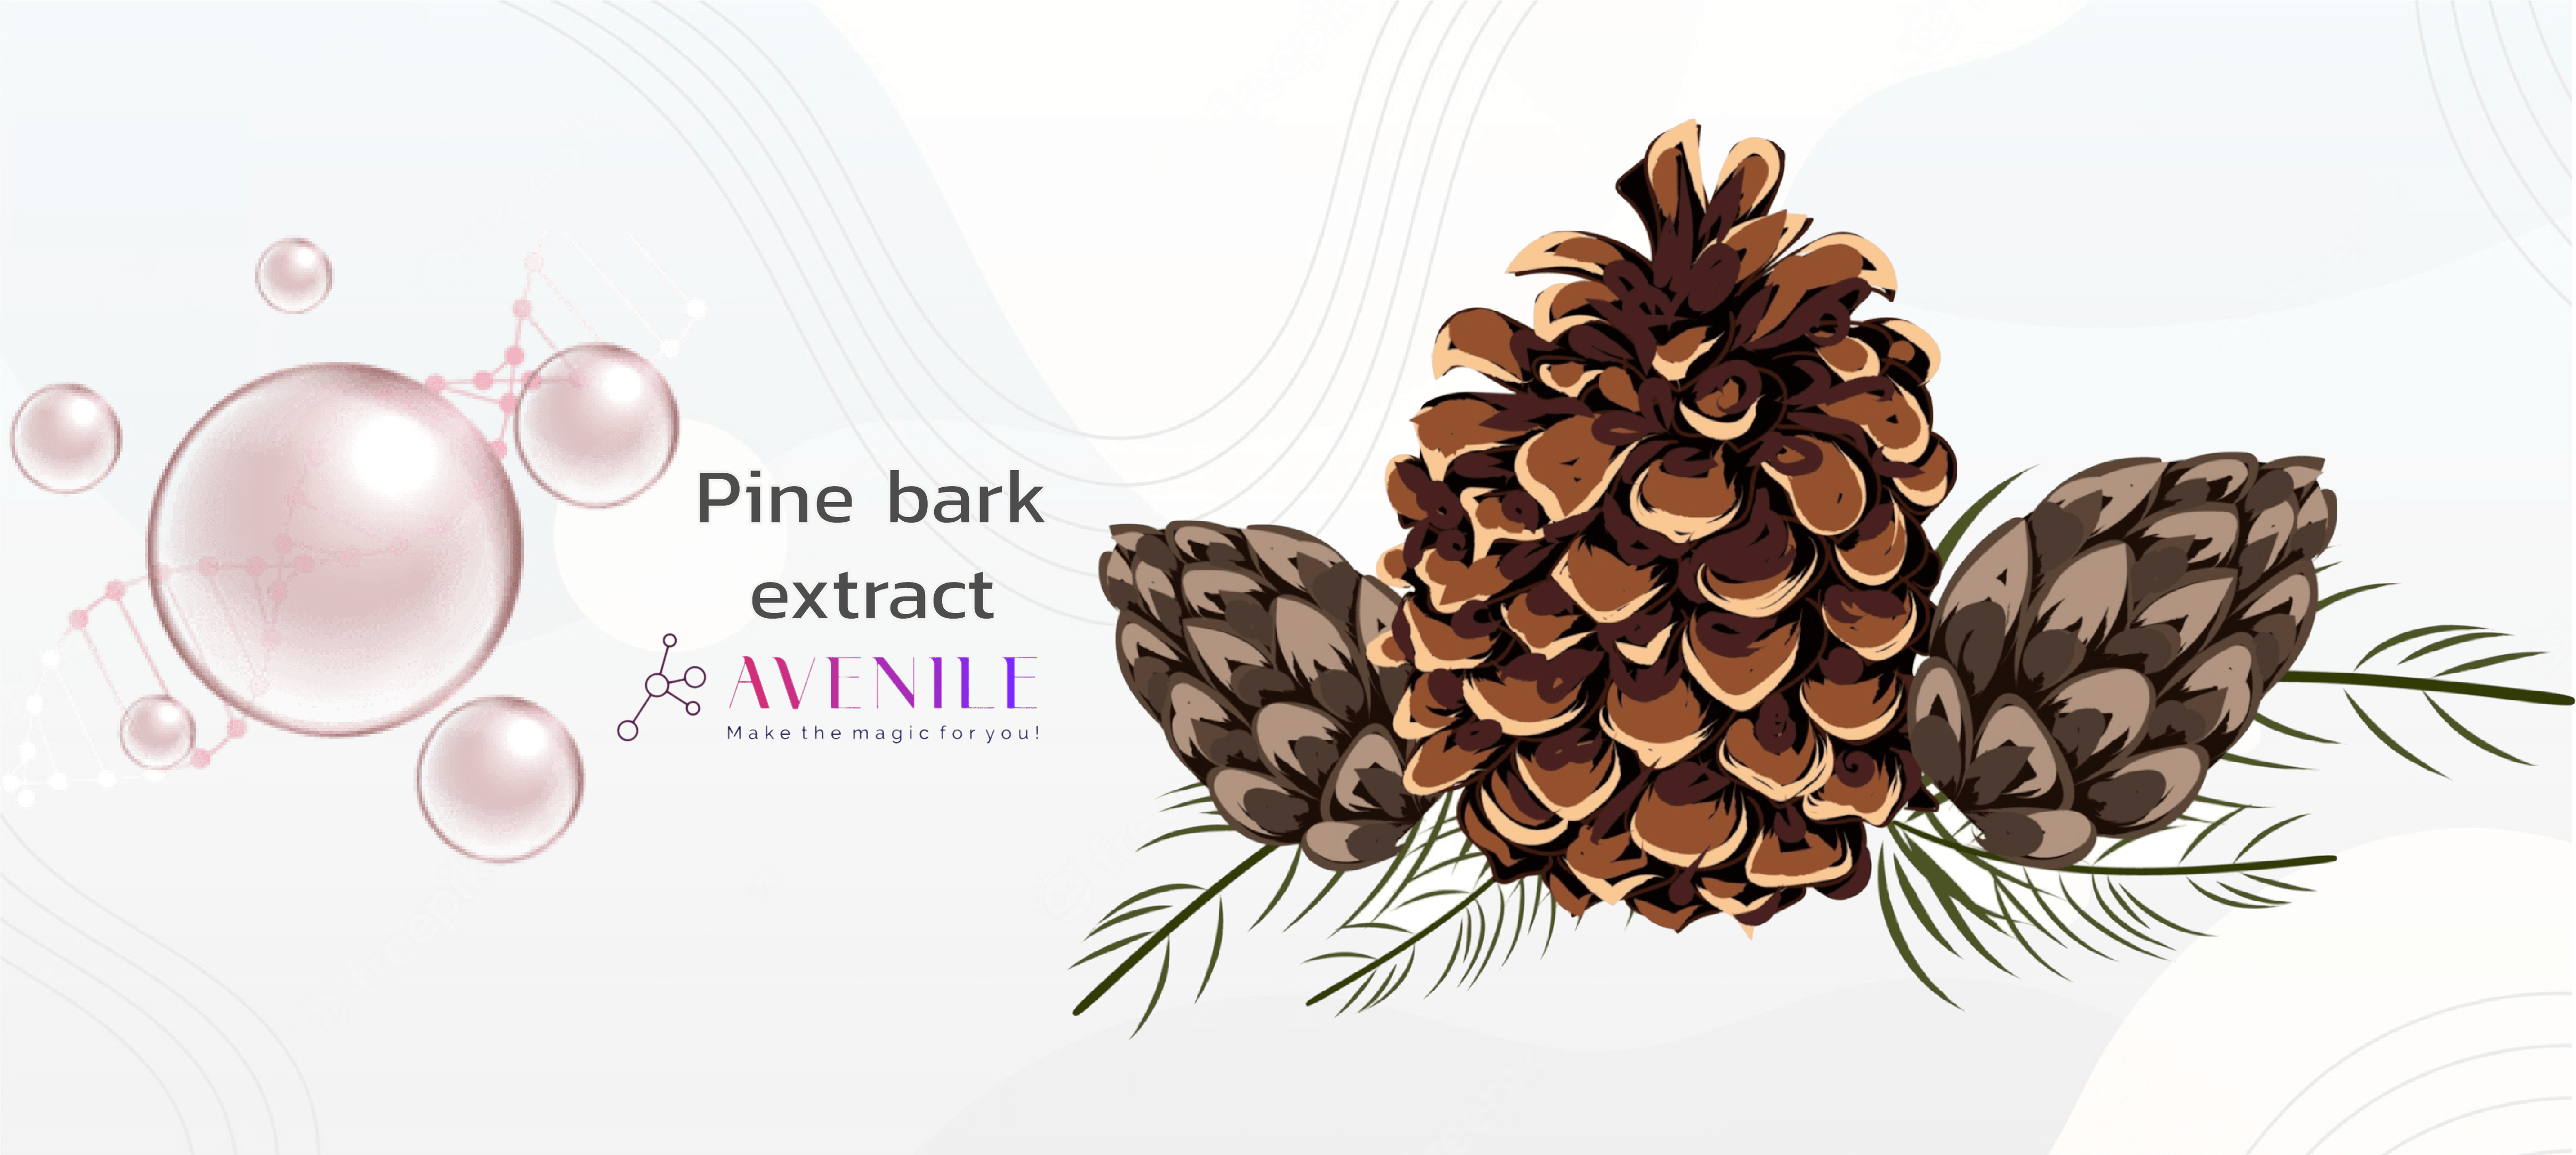 Pine bark extract